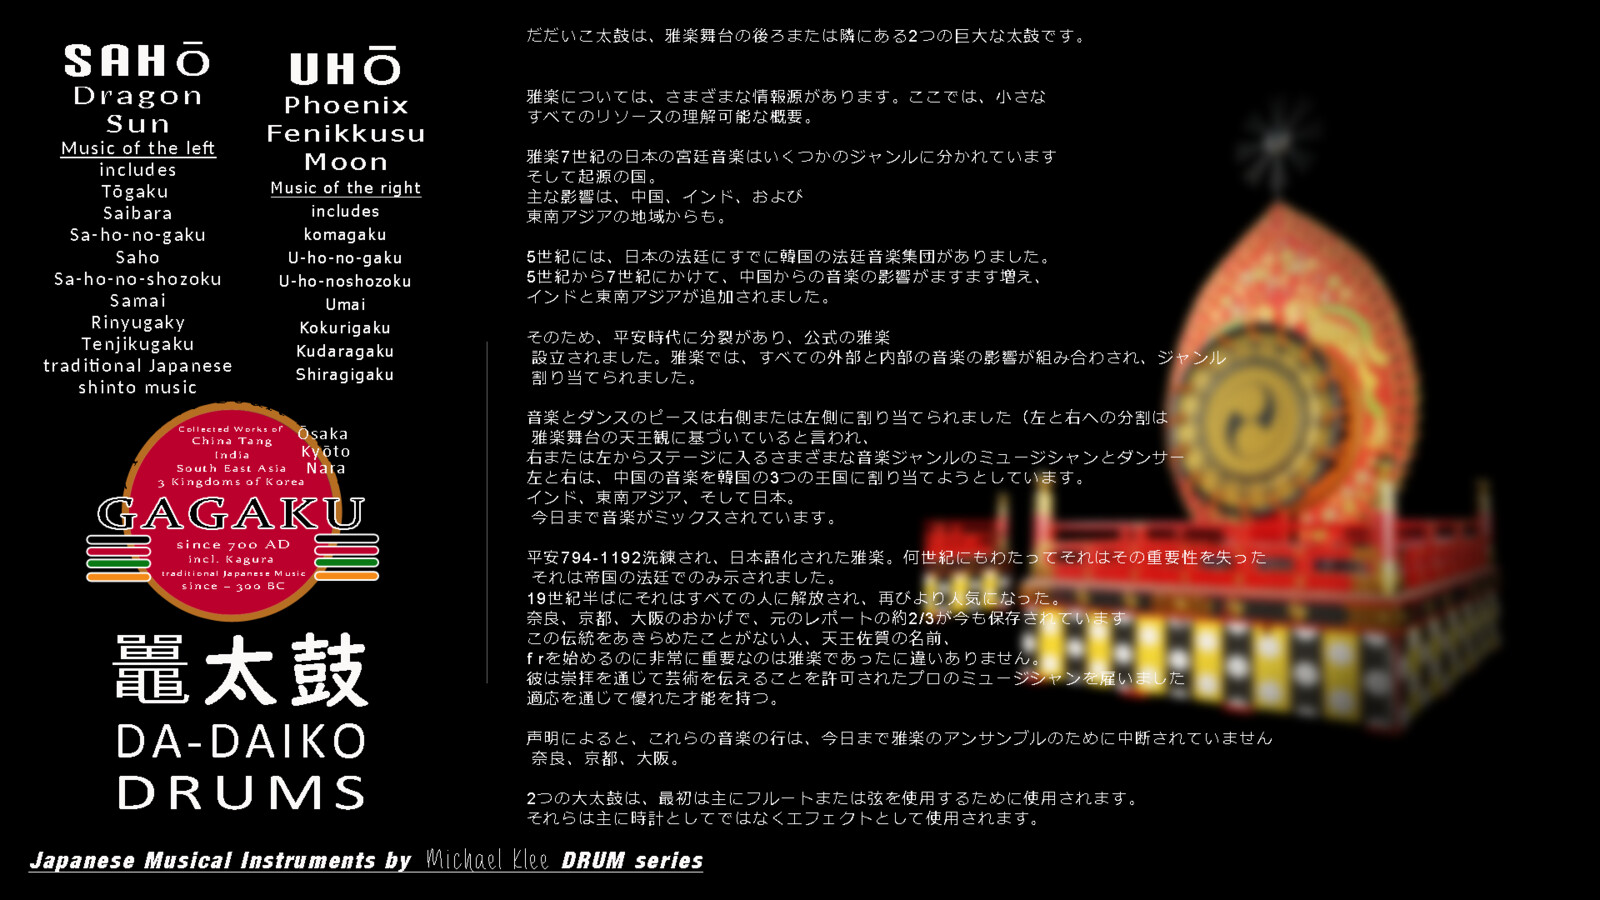 Da-daiko 鼉太鼓 Japanese giant drums for the gagaku 雅楽 court music - description Japanese